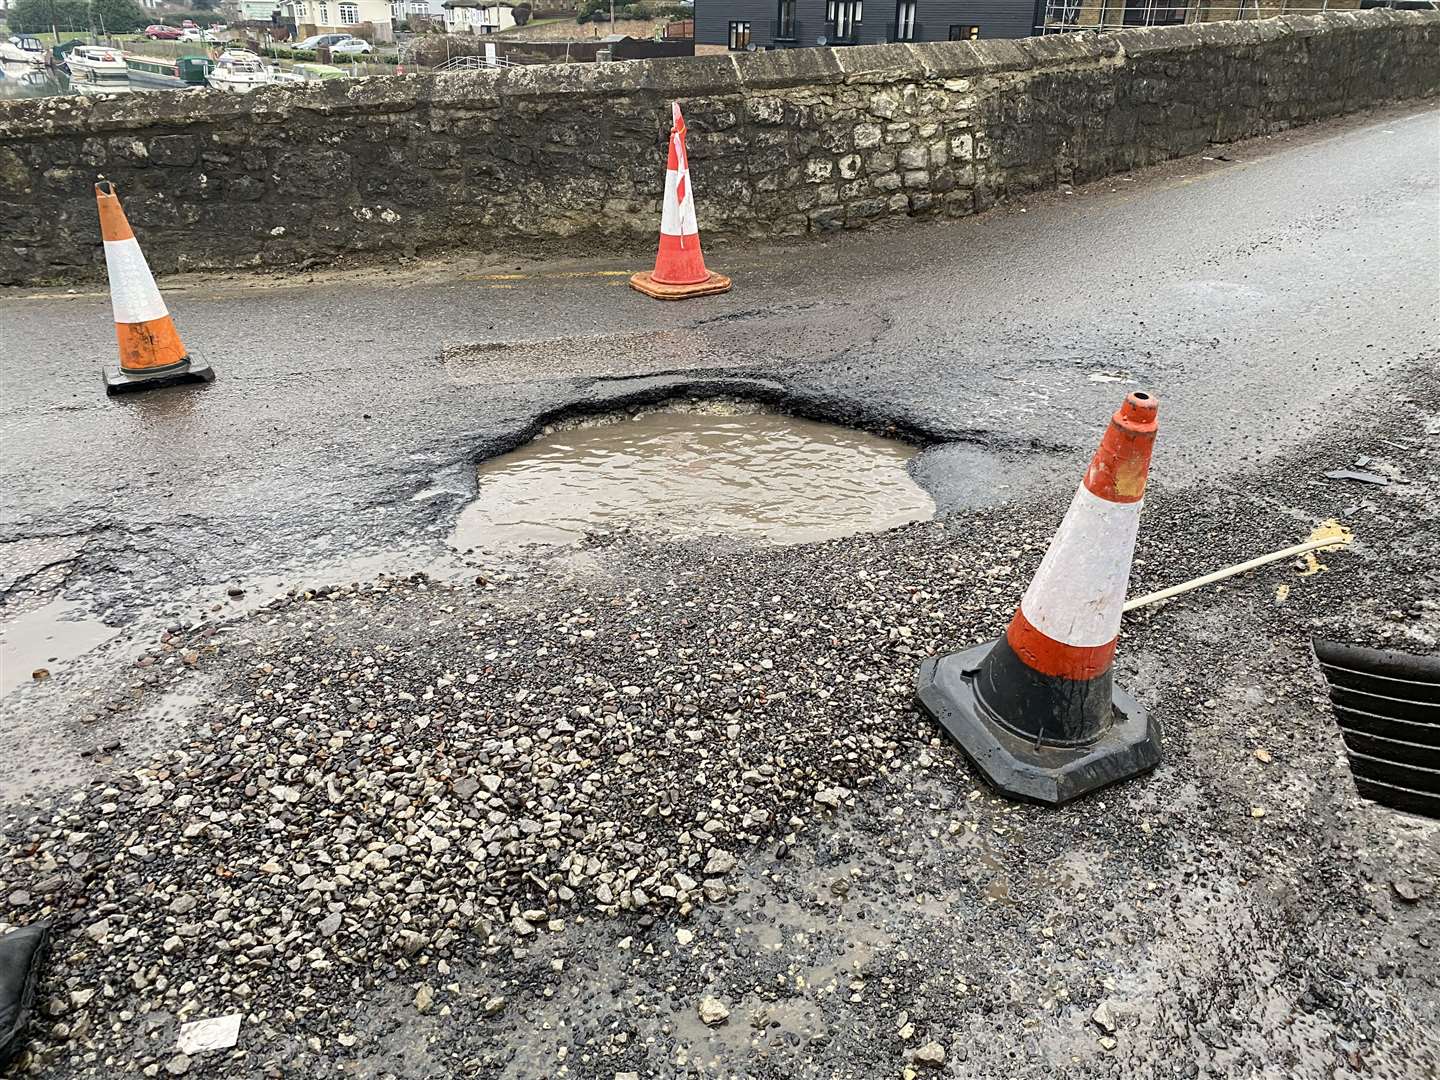 Huge pothole just before the East Farleigh Bridge in Maidstone